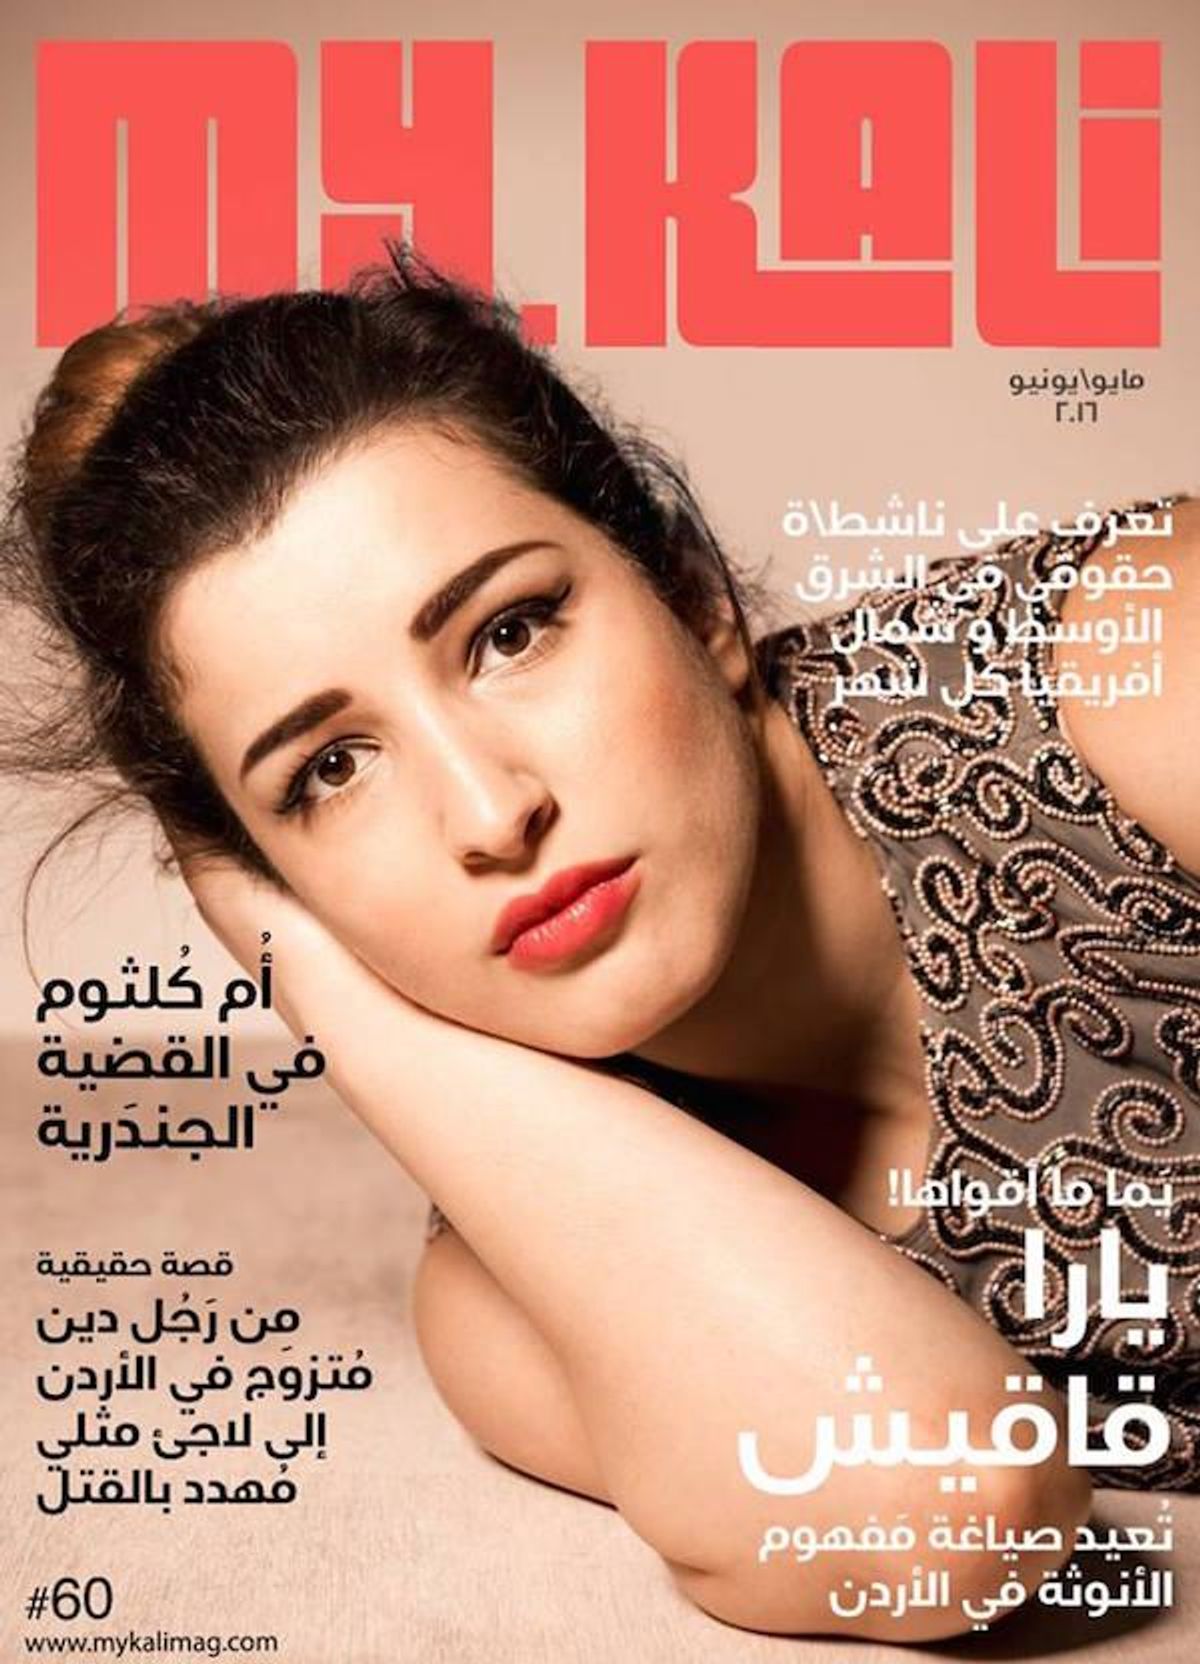 arab-mag-cover.jpg